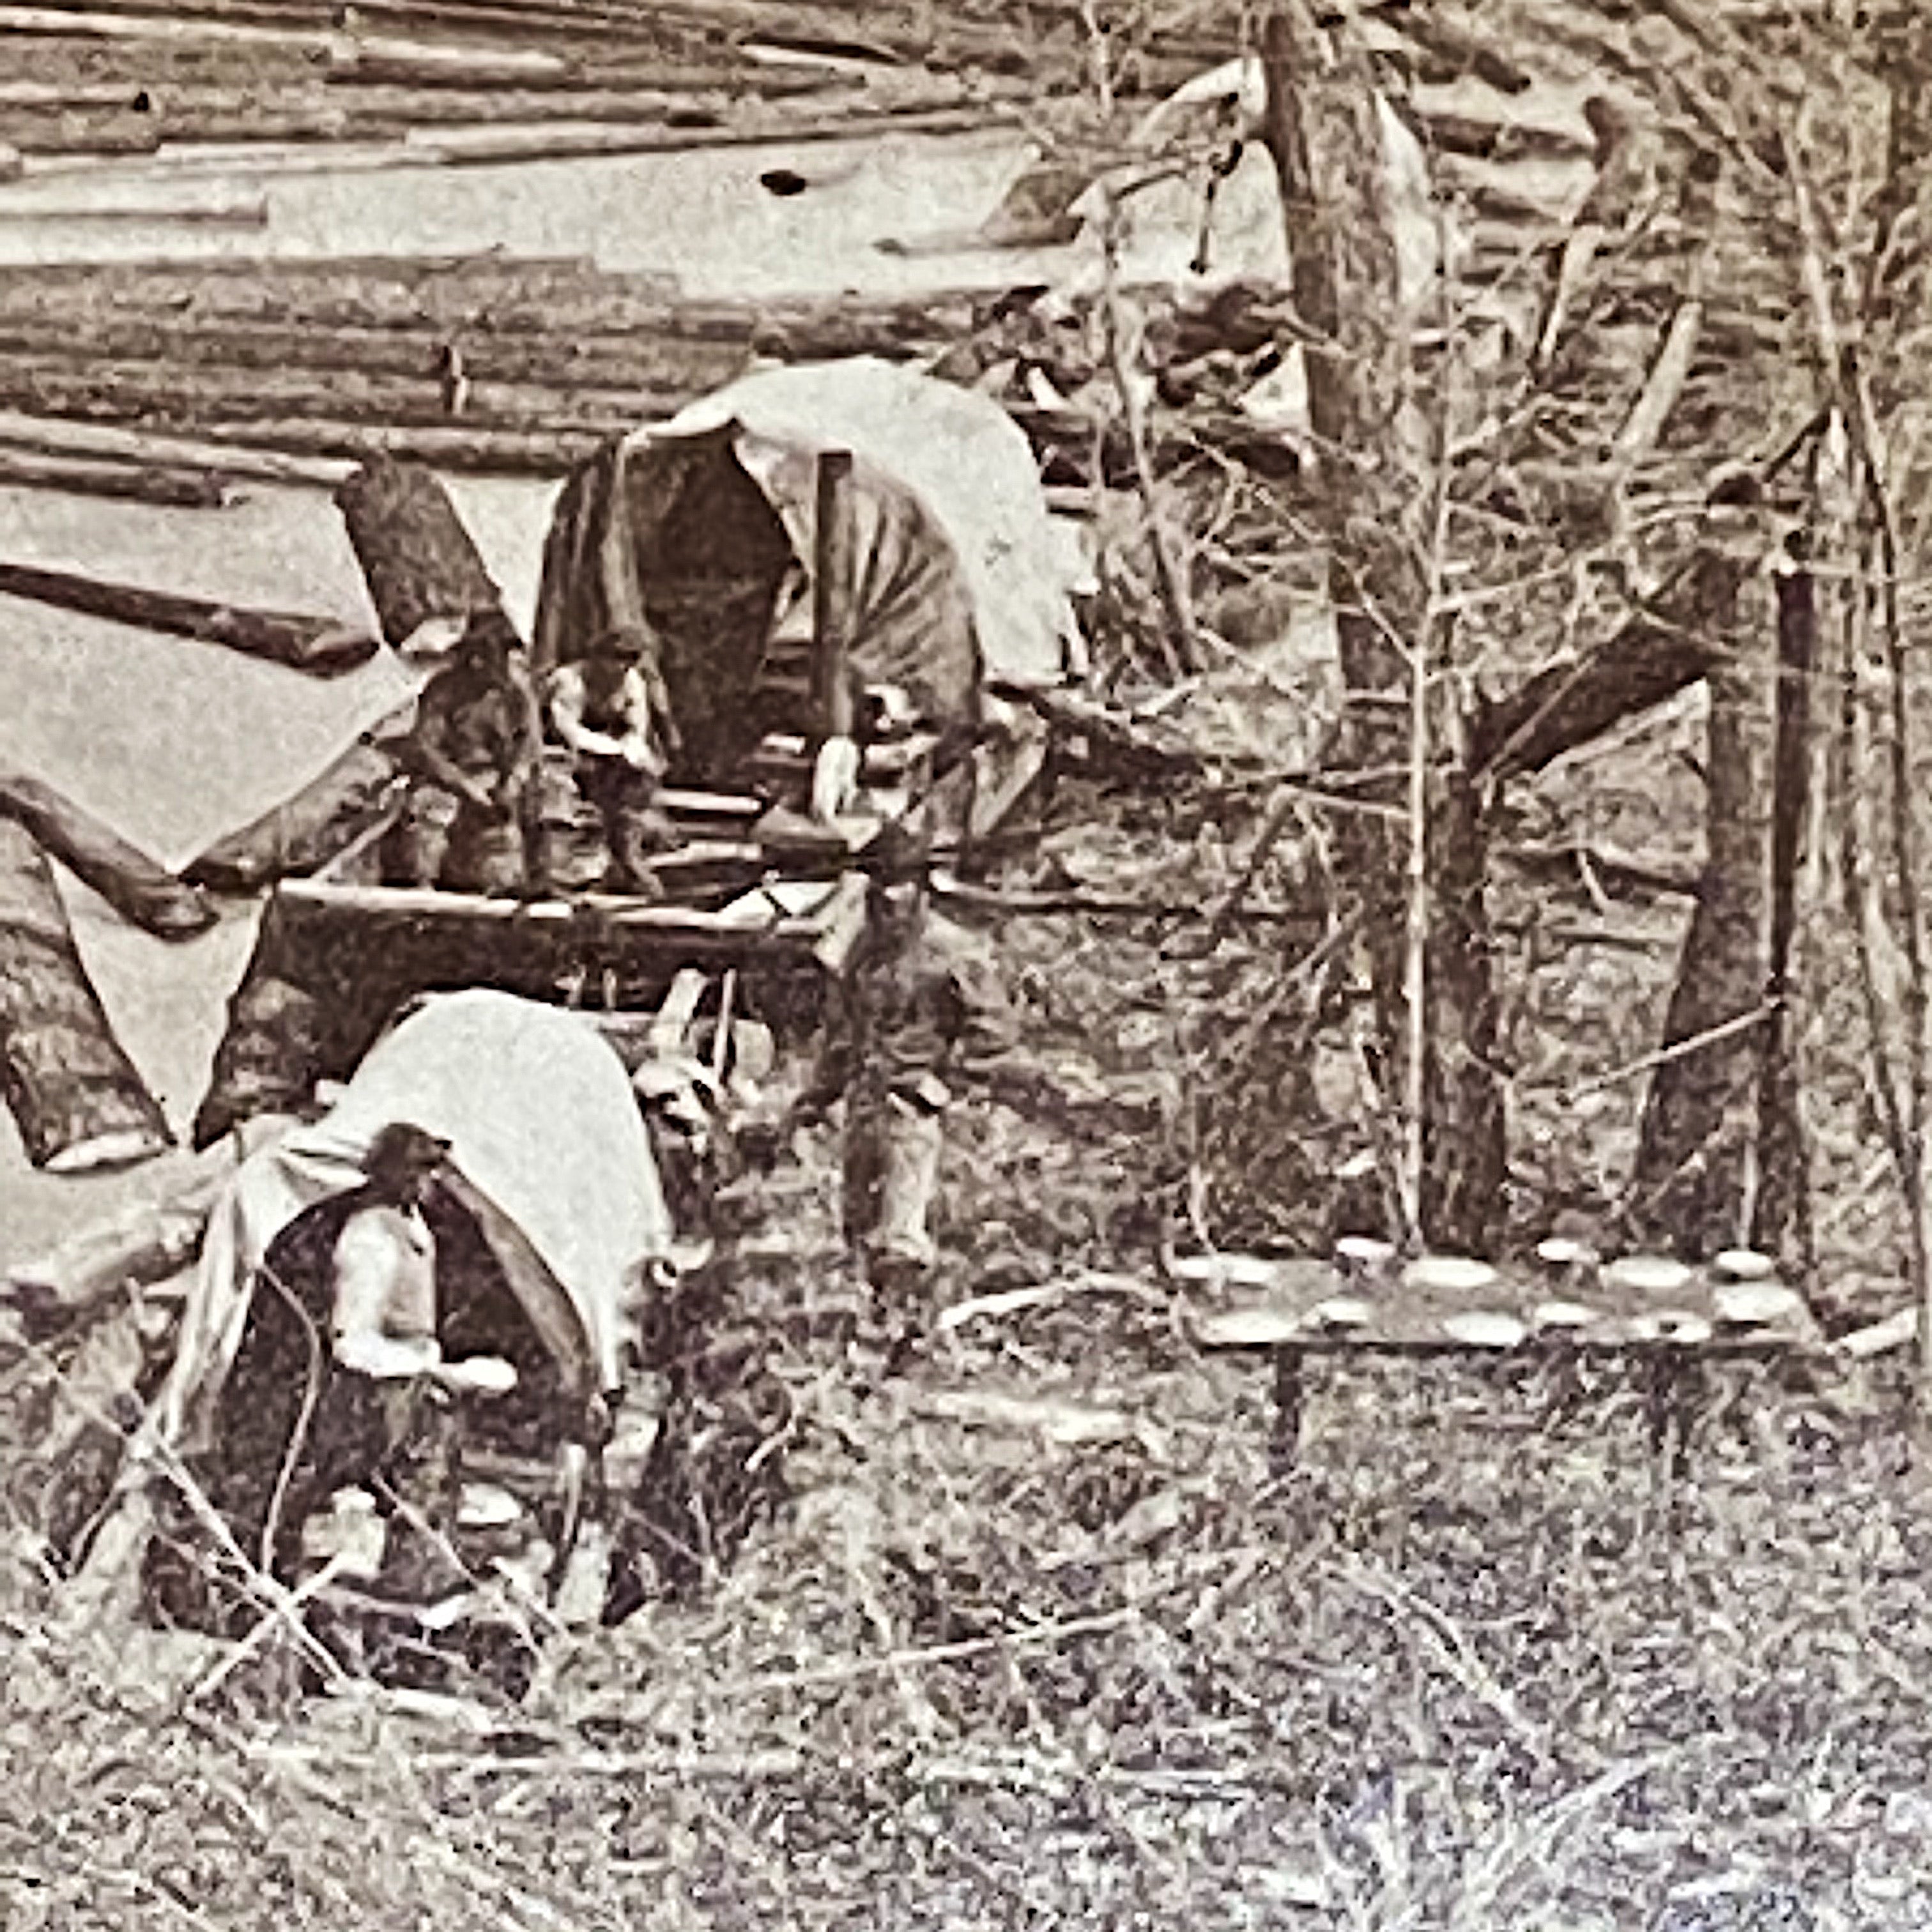 Antique Logging Photographs from 1860s - Louis Hill Estate - Elias Moses Camp Minnesota Rum River - Rare Occupational Logging Camp Photos